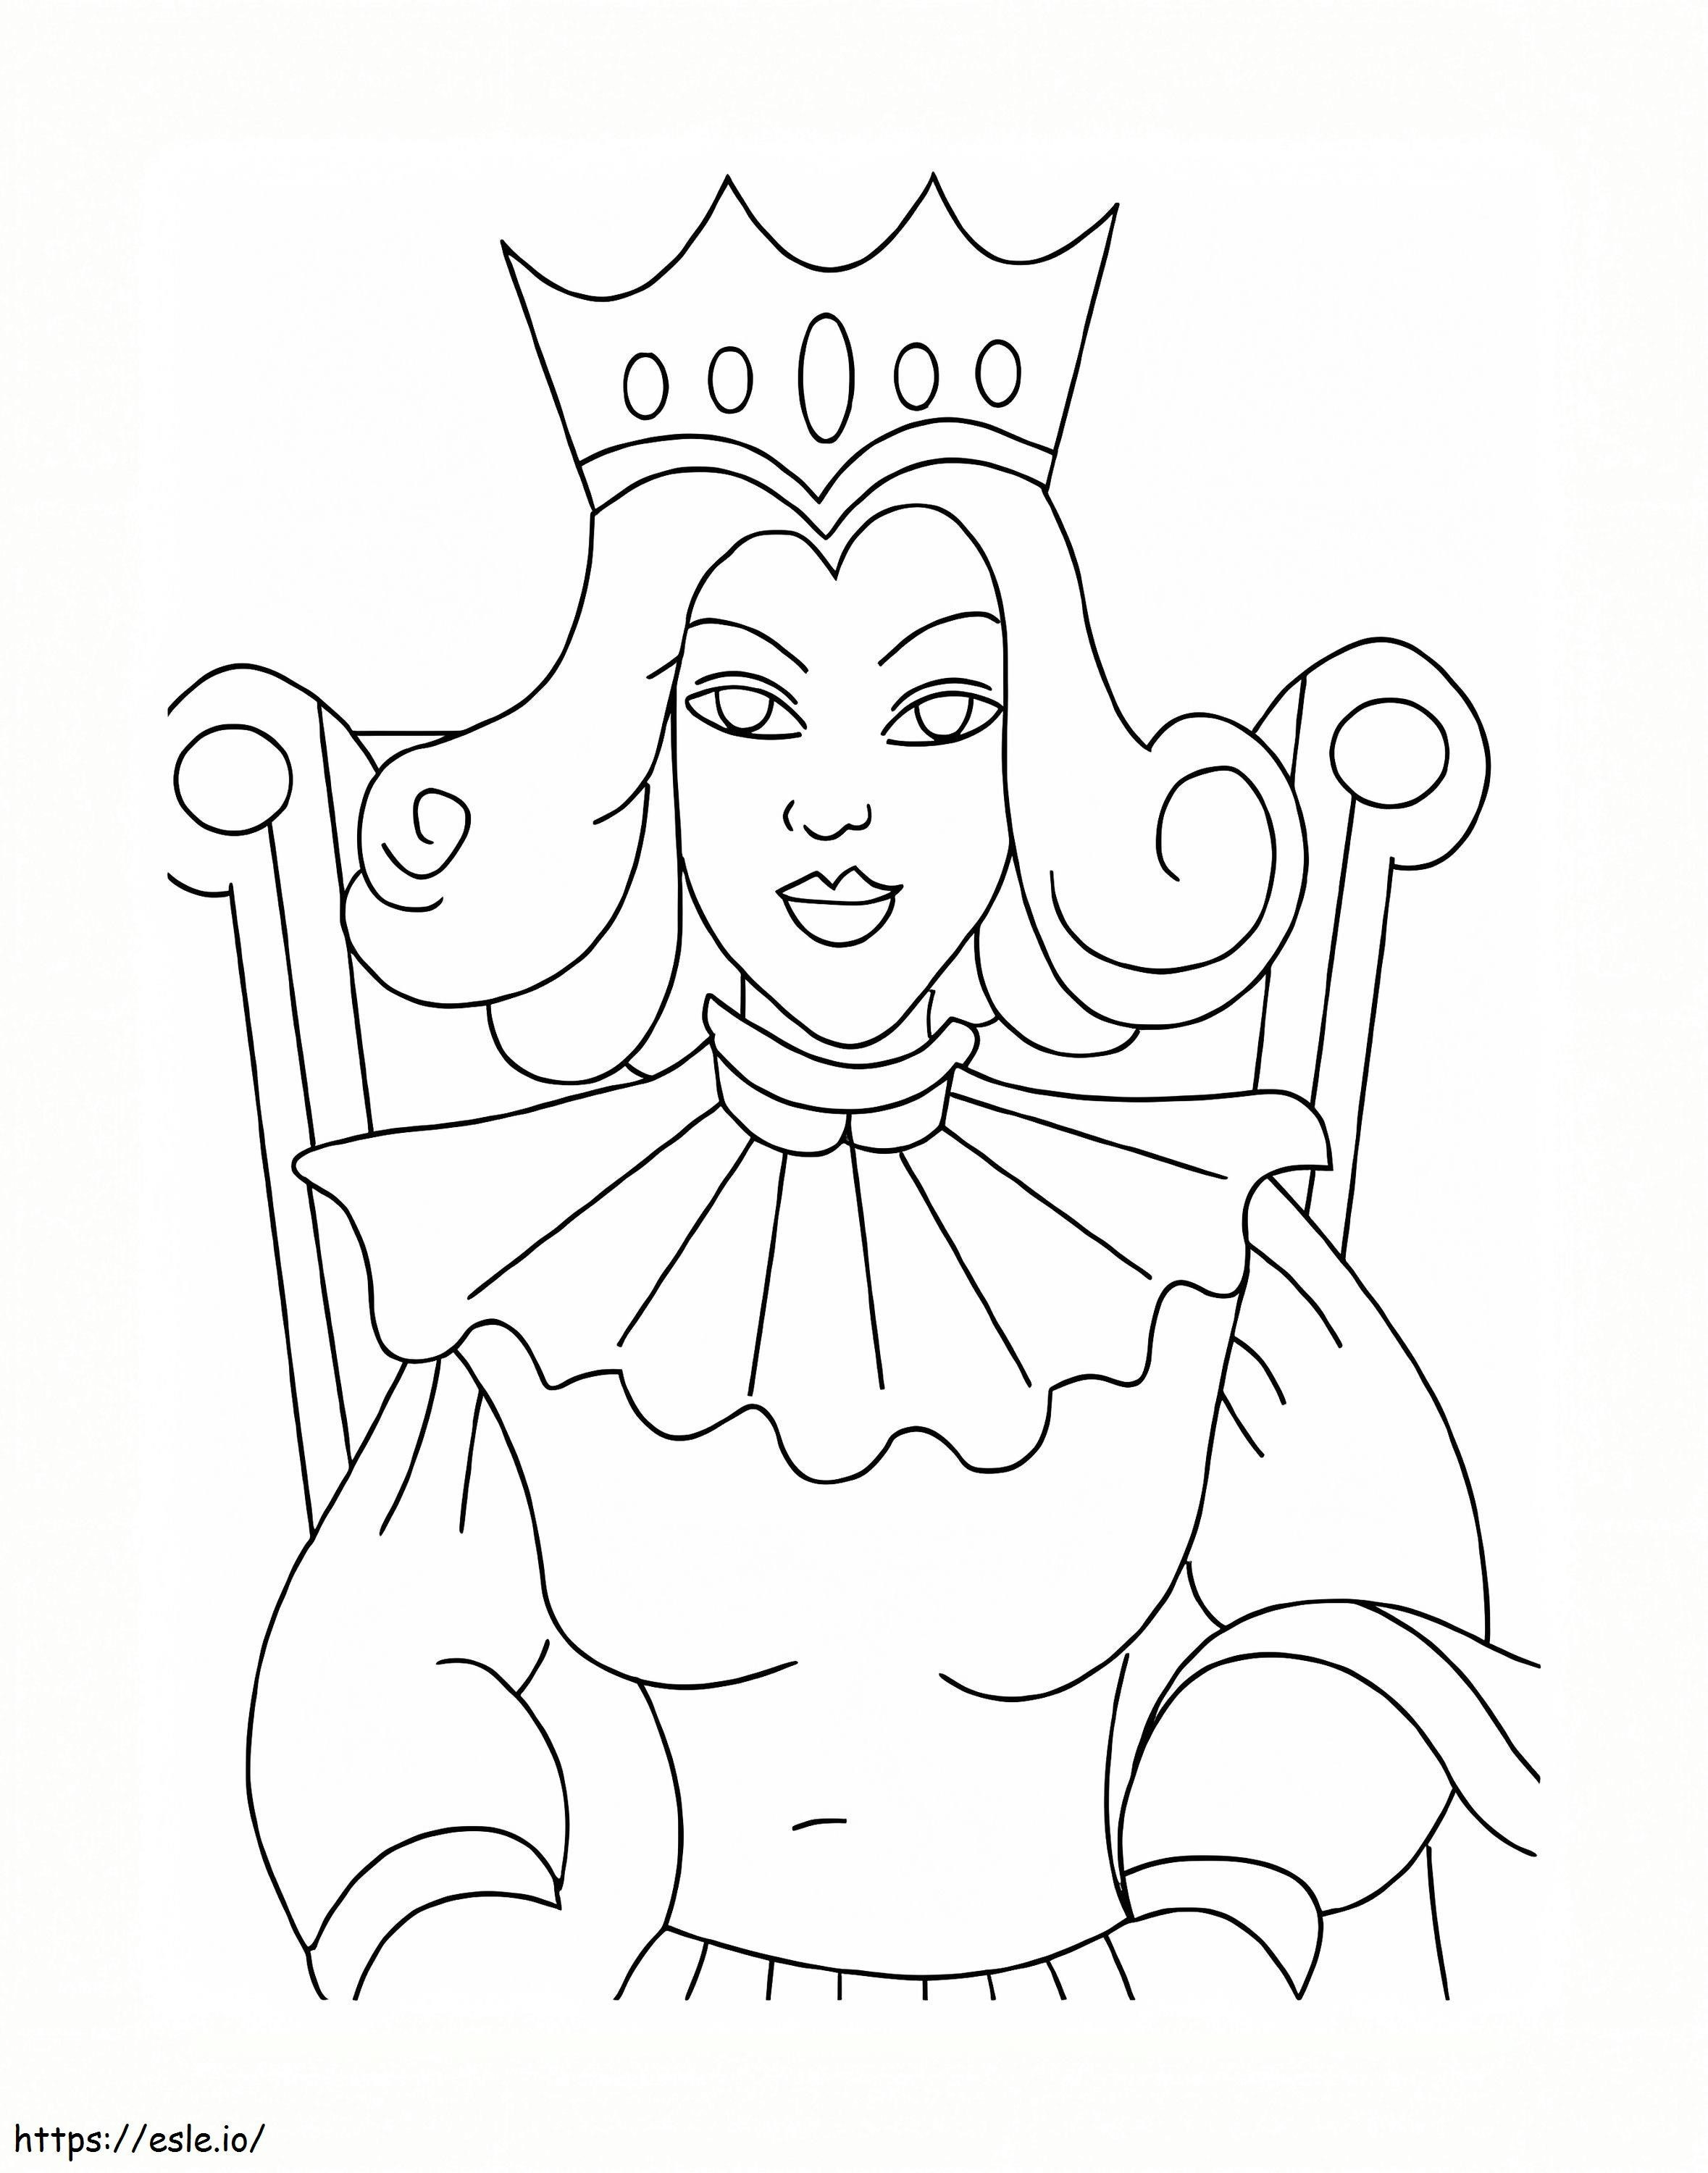 Königin auf Stuhl ausmalbilder